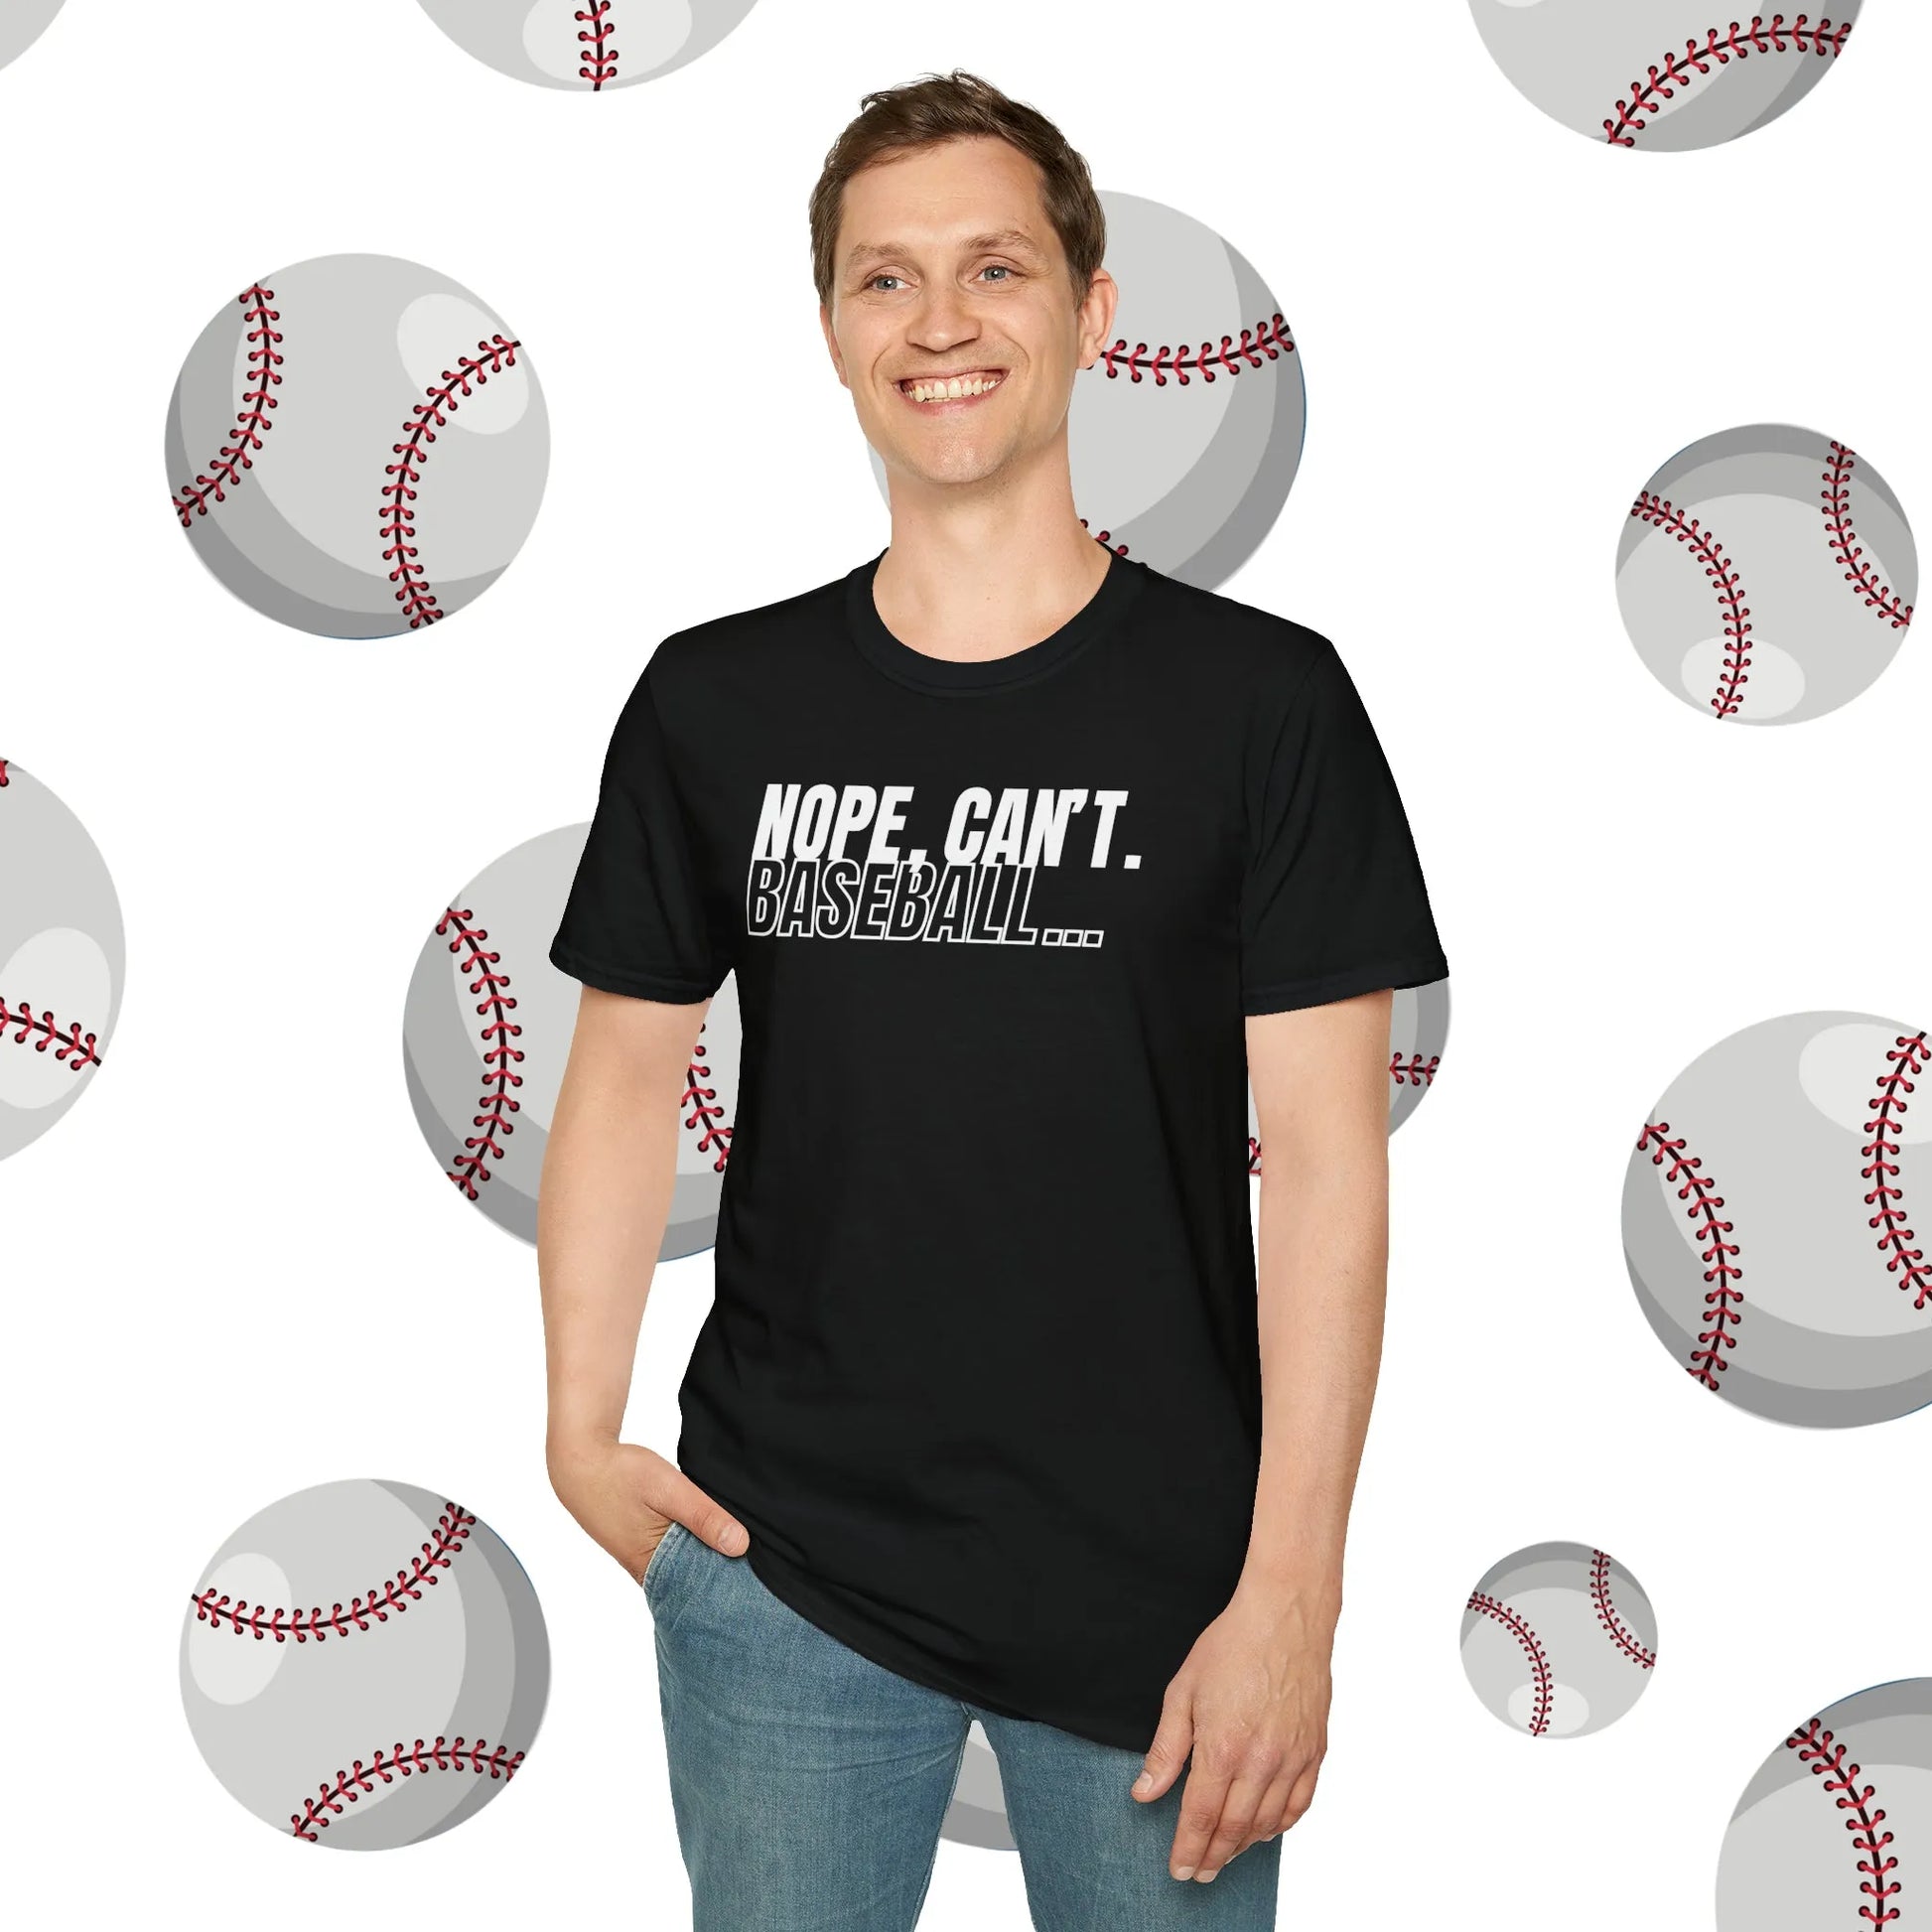 Nope, Can't. Baseball... Tshirt - Funny Baseball Shirt - Nope Can't Baseball Shirt Black Male